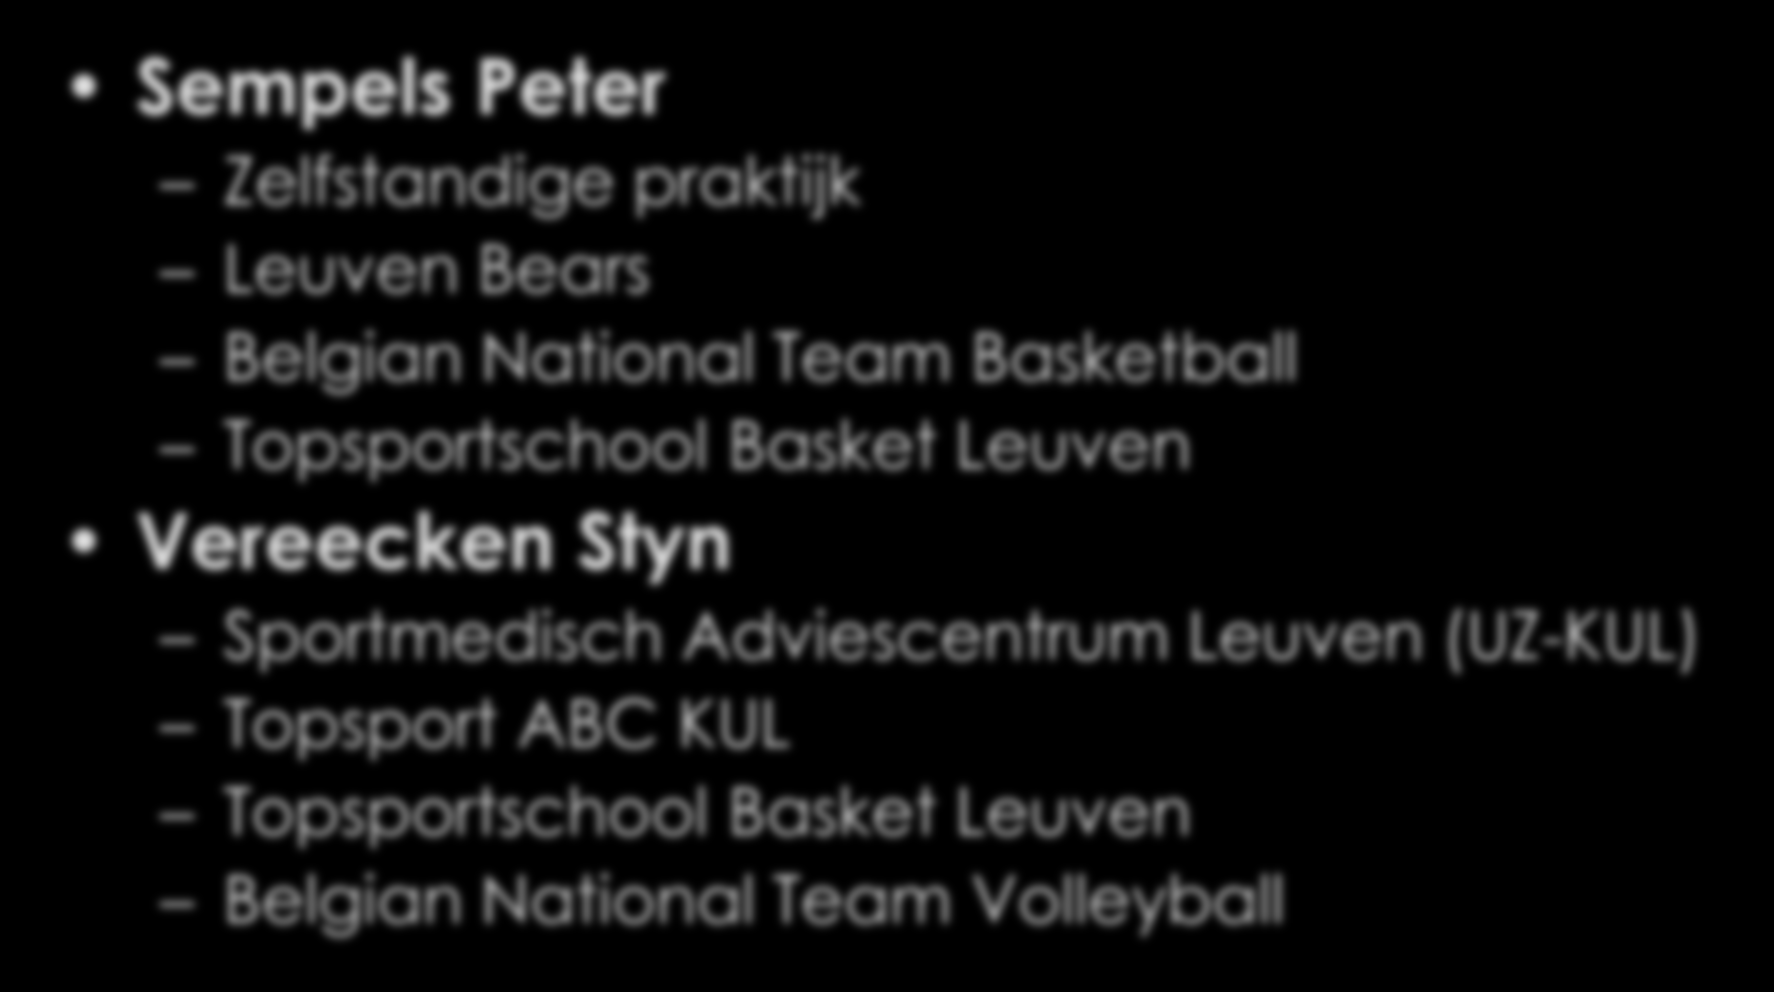 Expertise Sempels Peter Zelfstandige praktijk Leuven Bears Belgian National Team Basketball Topsportschool Basket Leuven